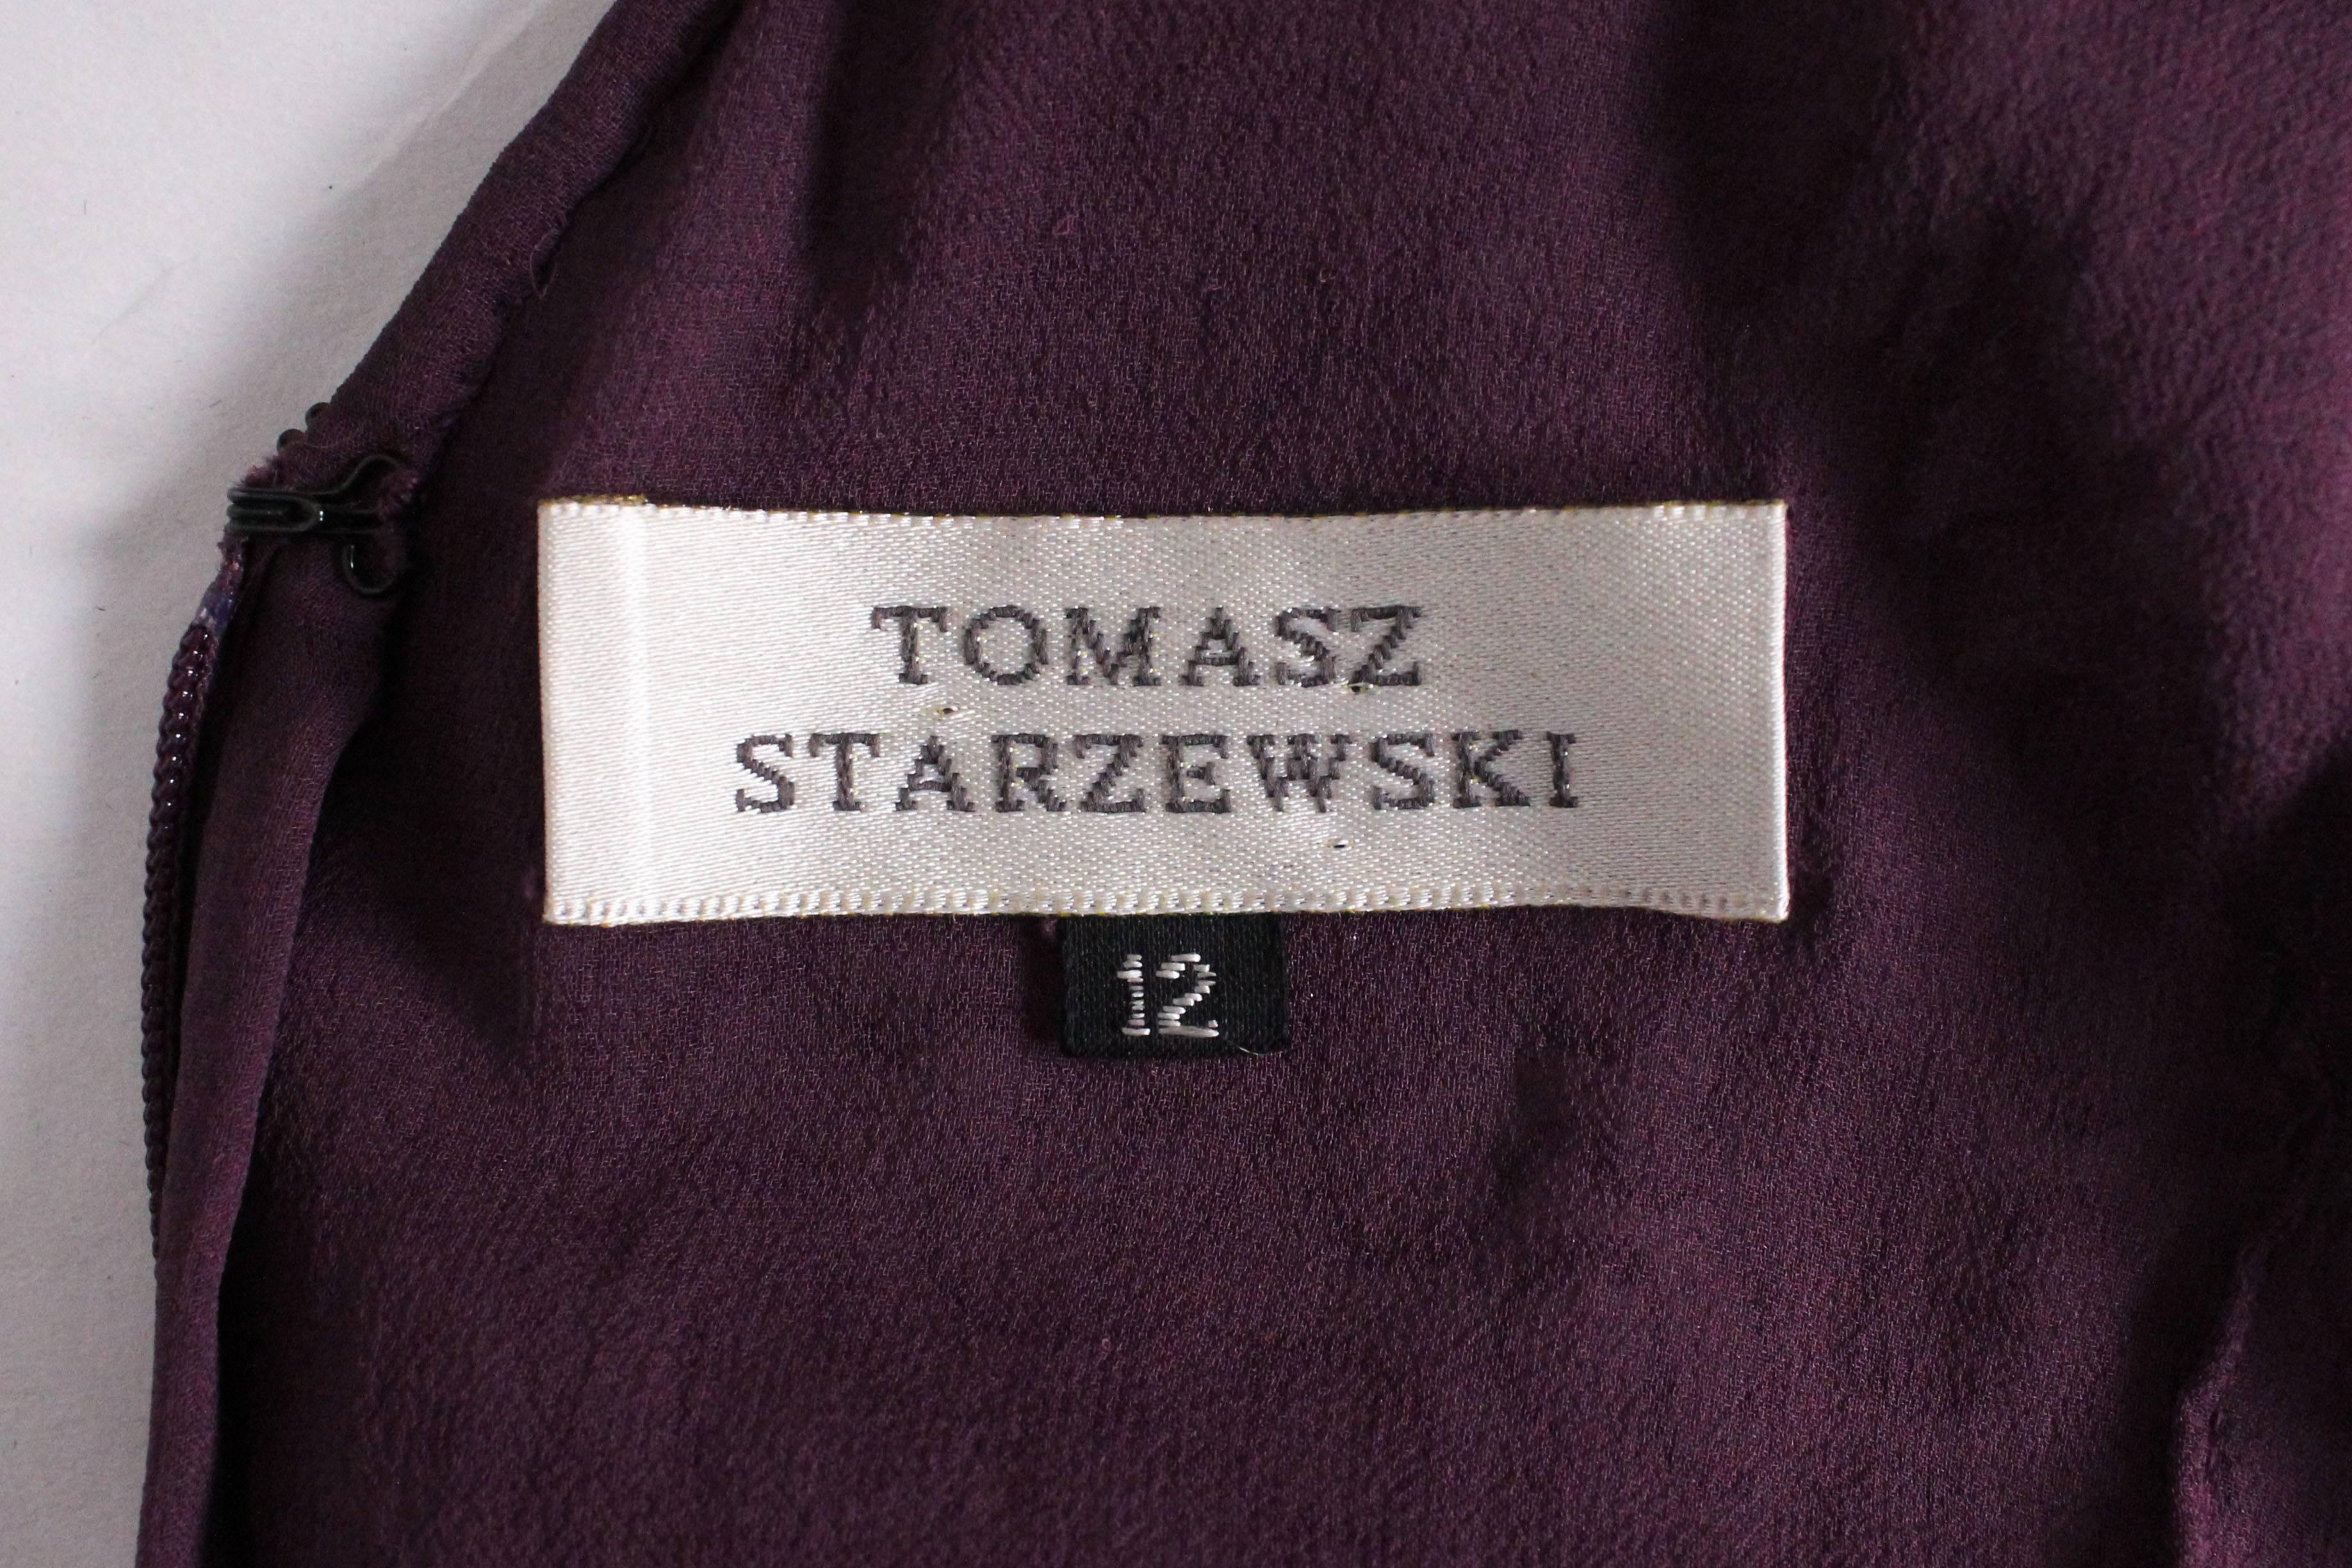 A vintage 1990s purple Tomsaz Starzewski Aubergine Beaded Cocktail Dress For Sale 3